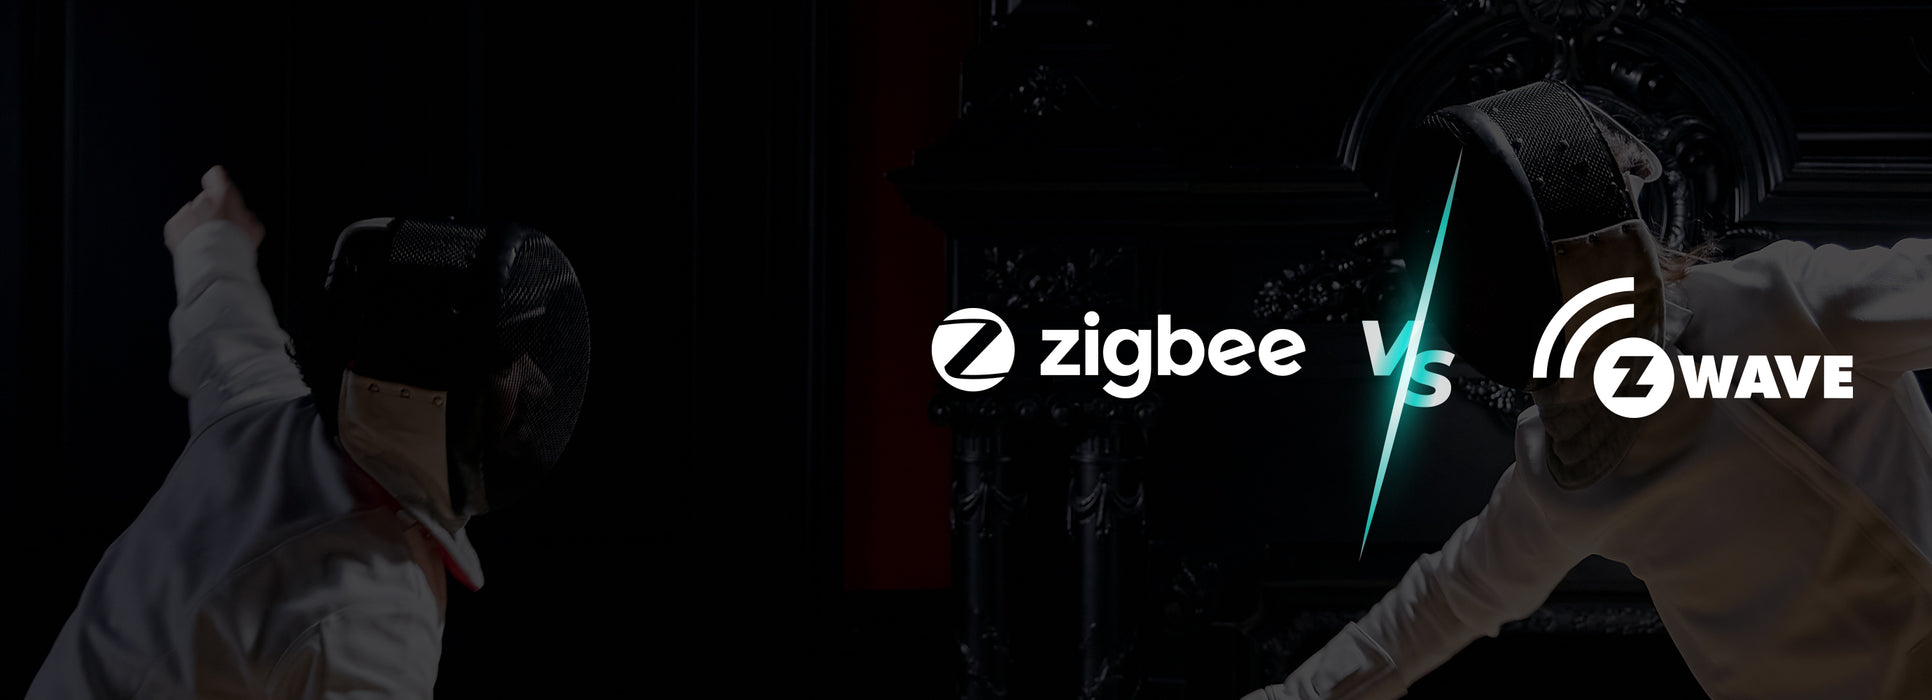 Zigbee vs Z-Wave: qual è la differenza?